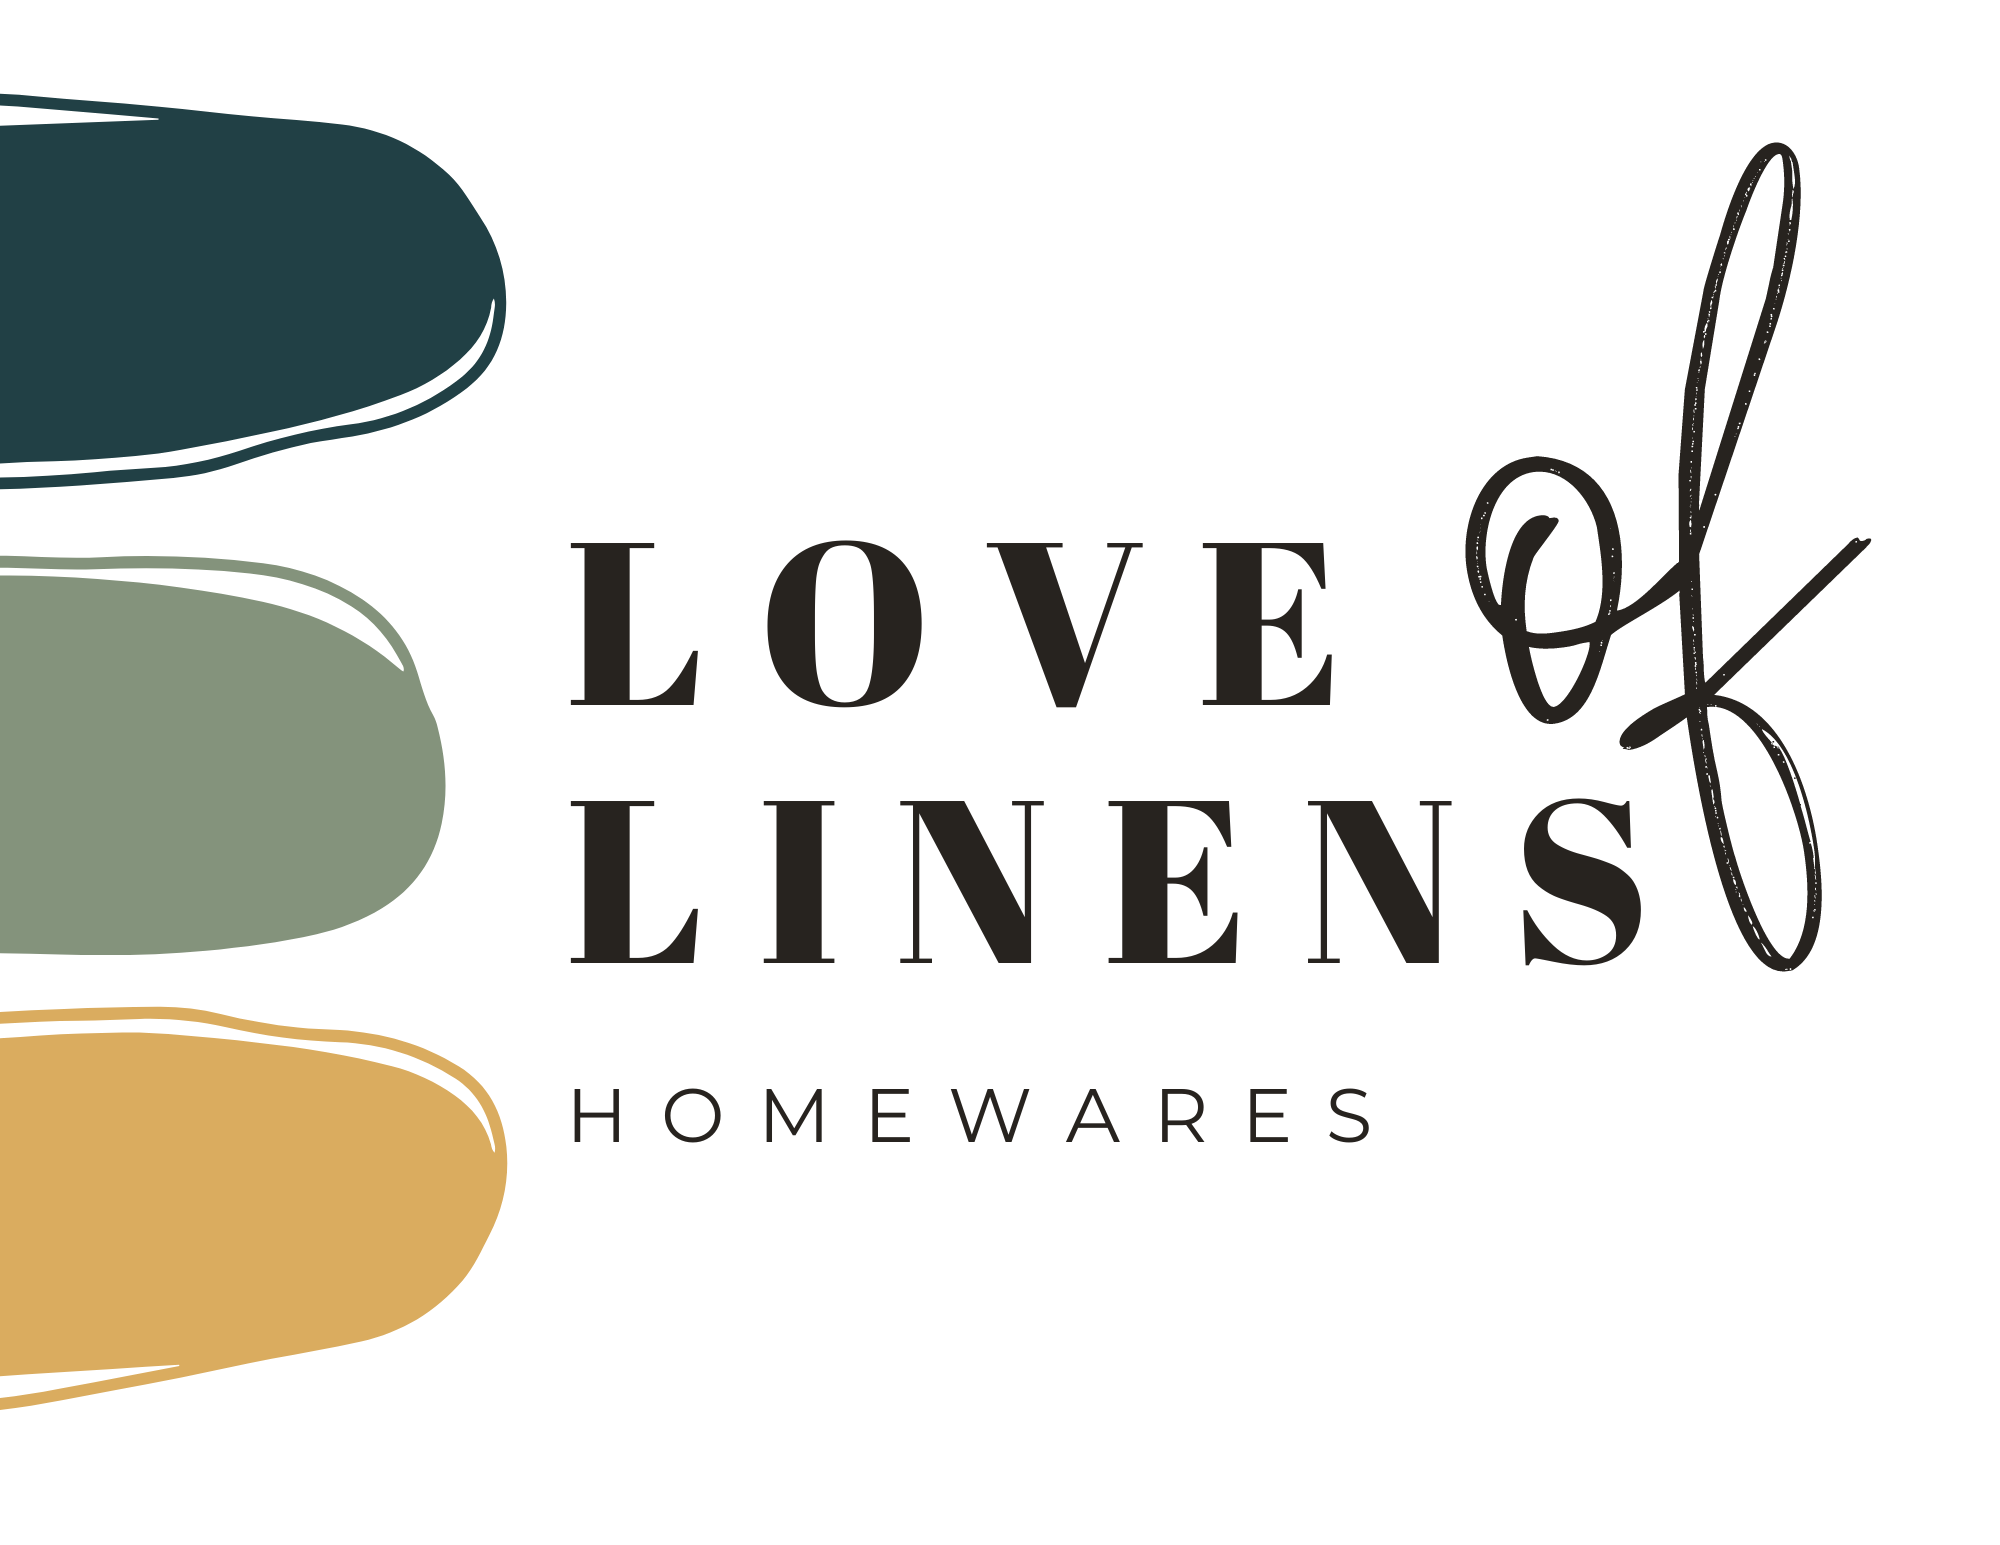 Love of Linens